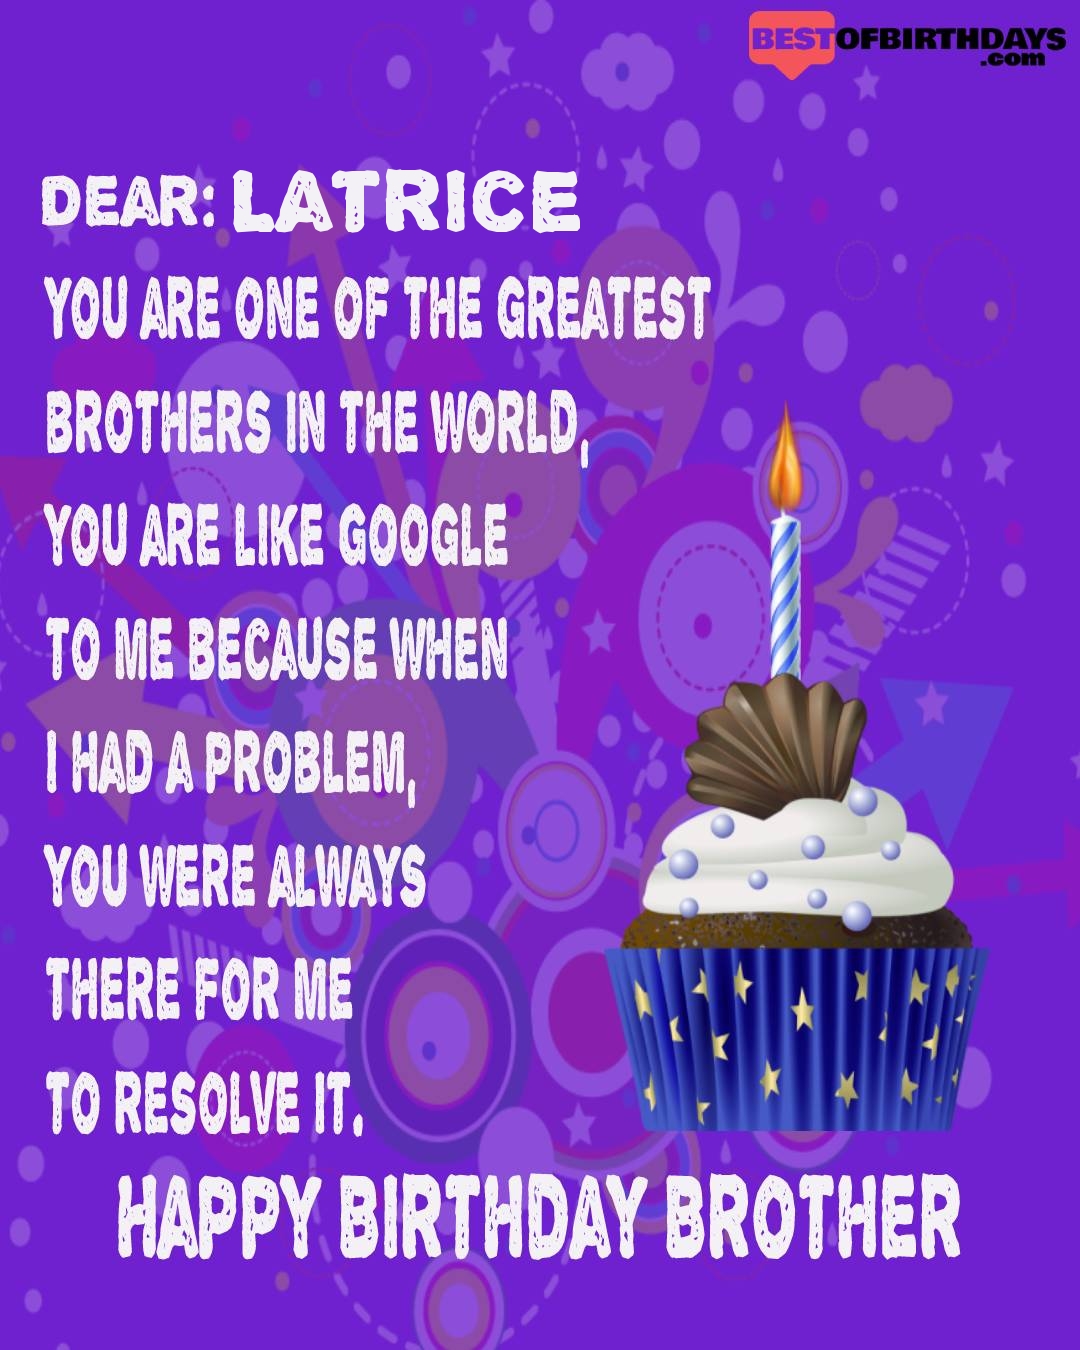 Happy birthday latrice bhai brother bro